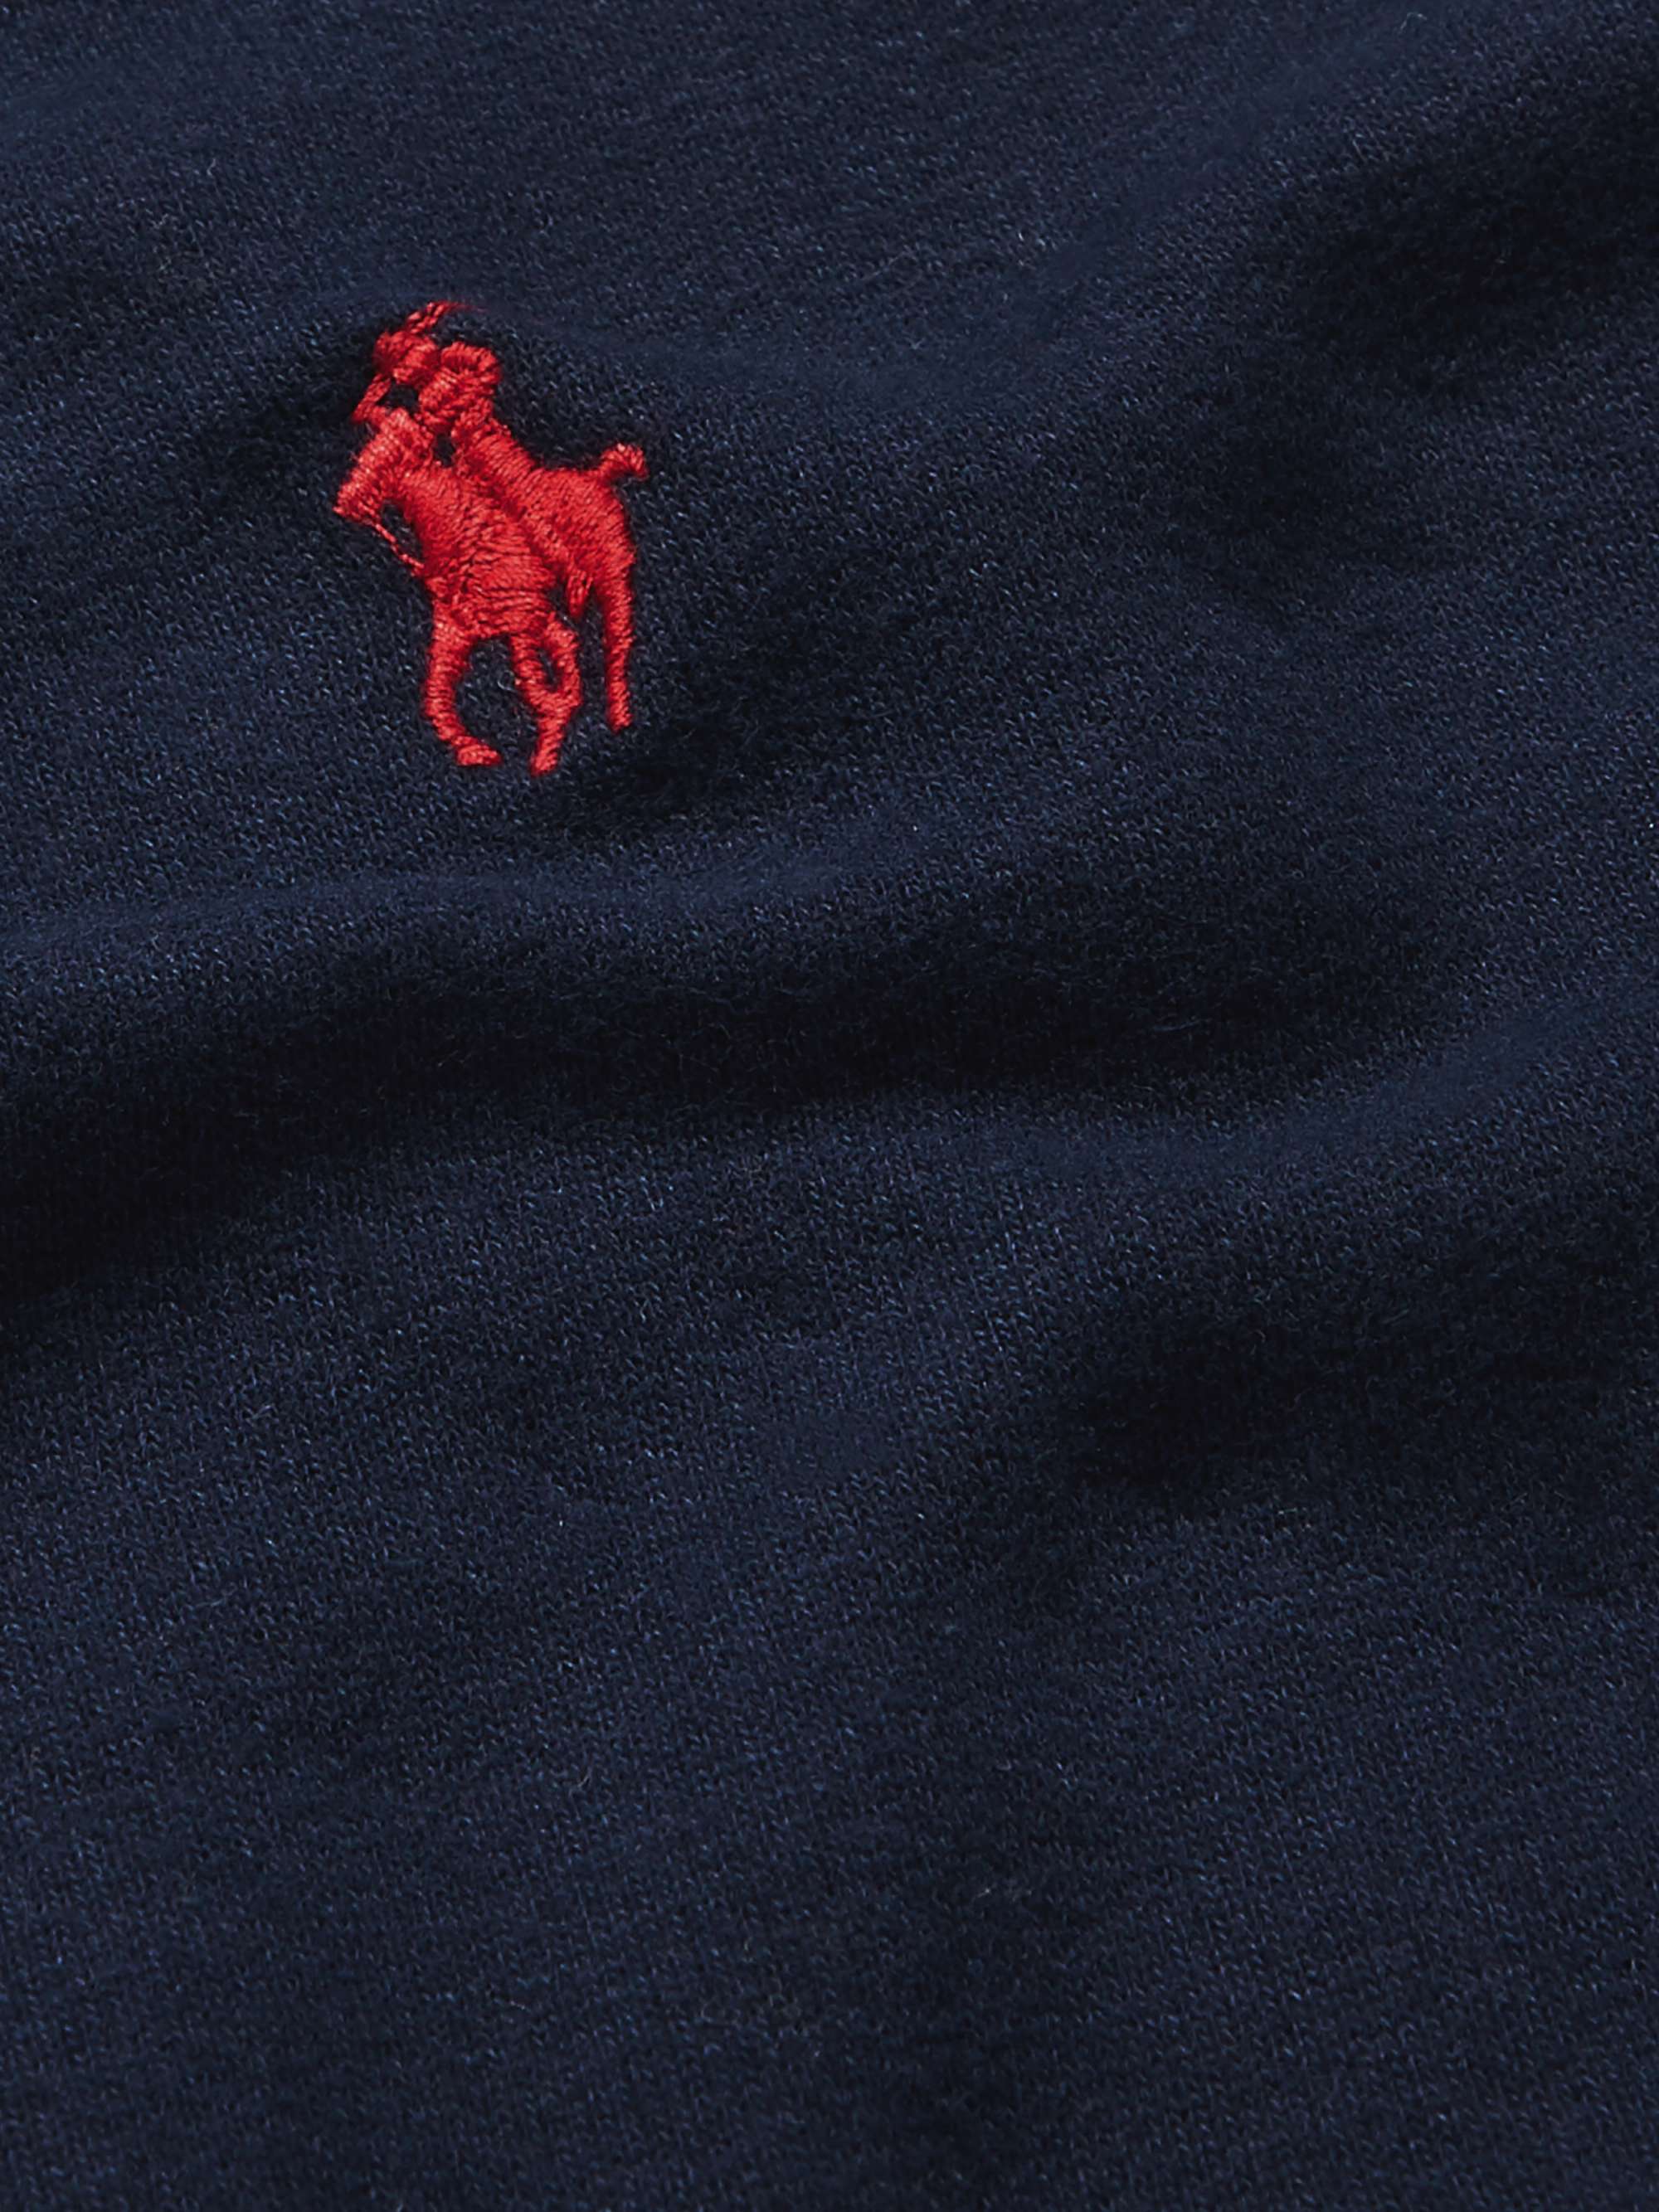 POLO RALPH LAUREN Logo-Embroidered Cotton-Blend Jersey Sweatshirt for Men |  MR PORTER